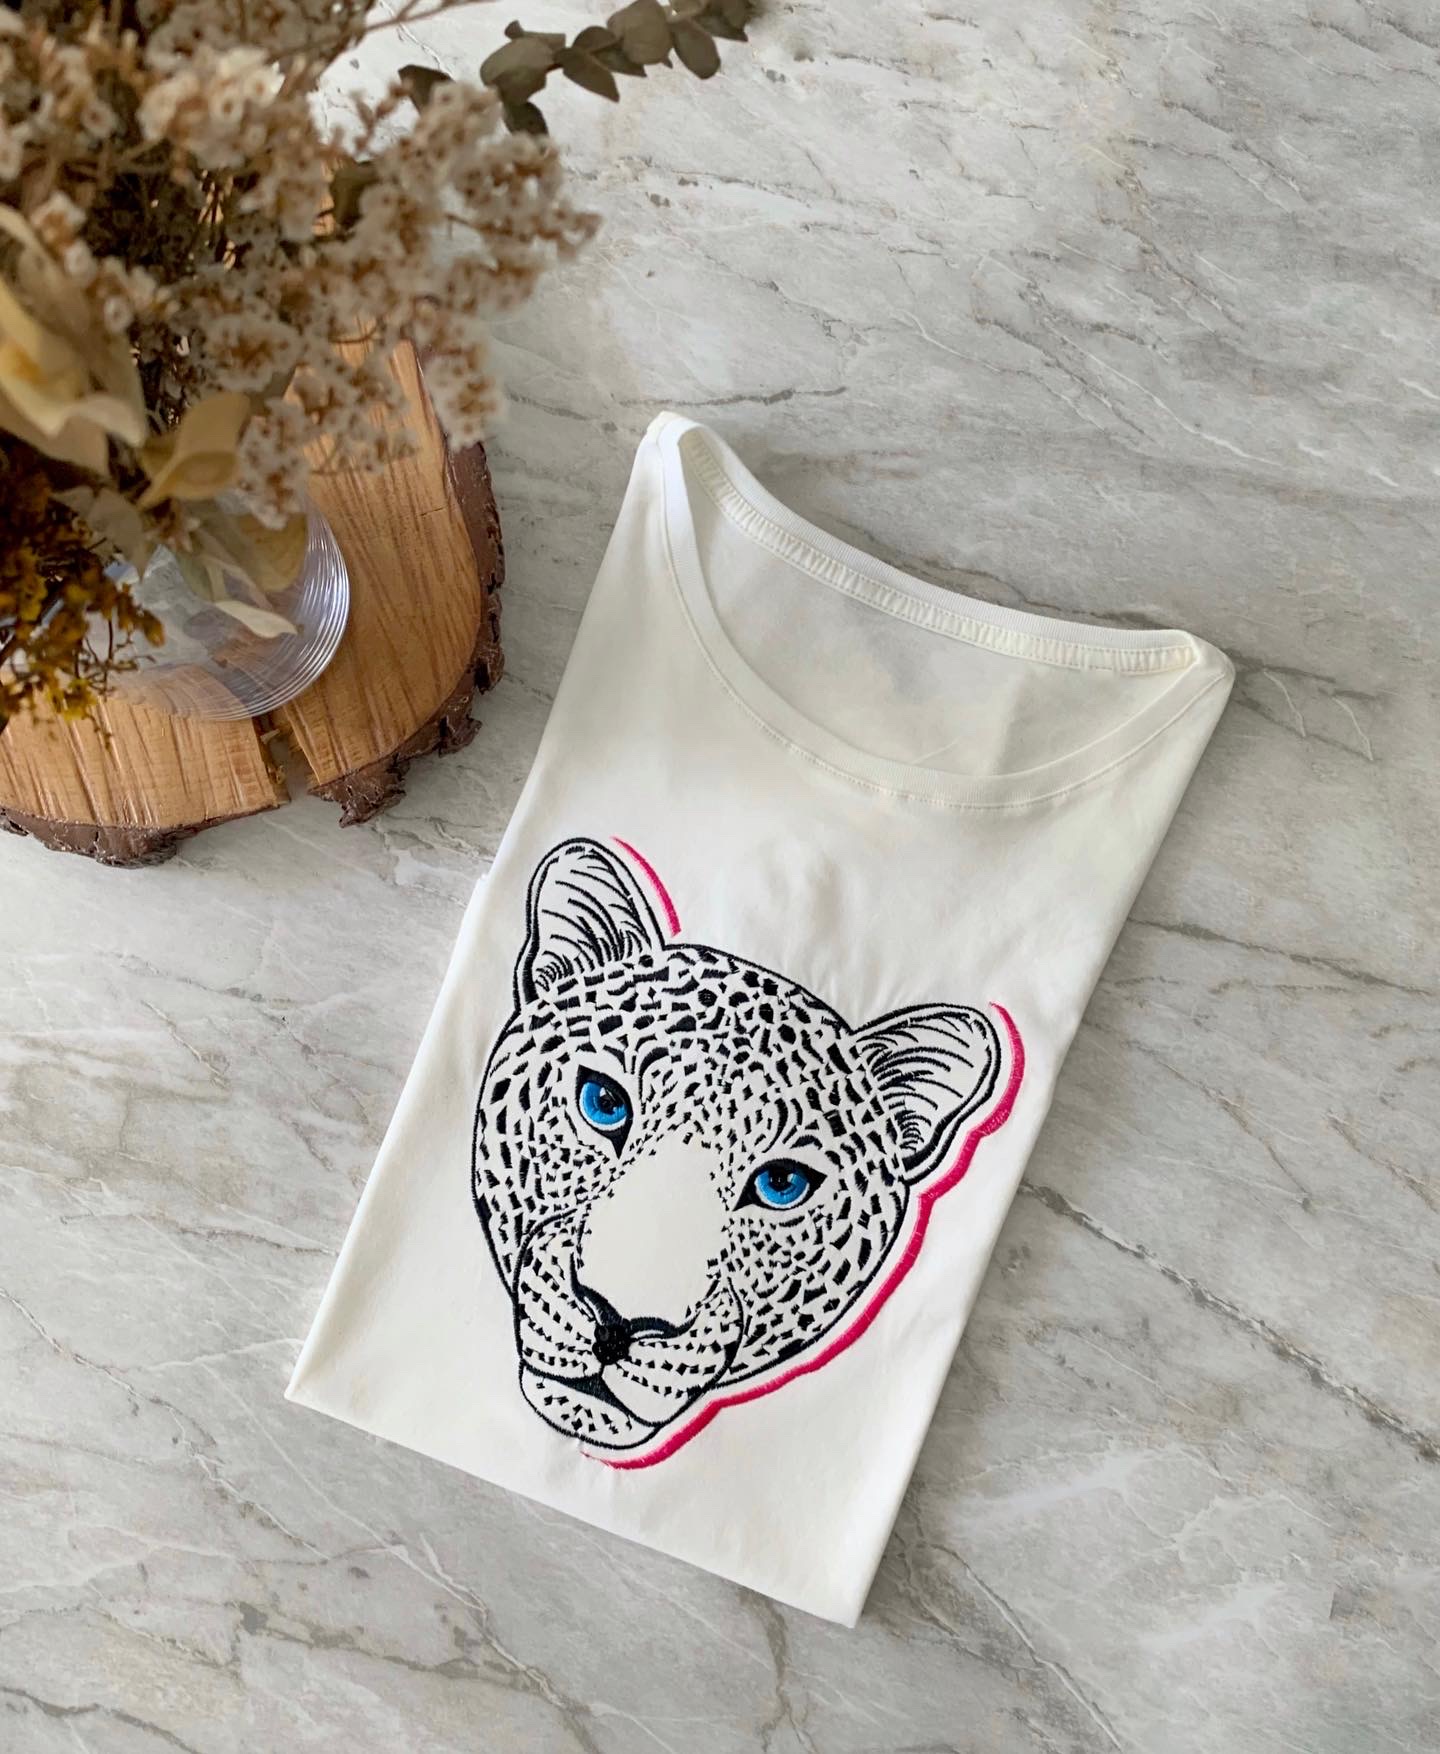 Camiseta leopard face bordada   